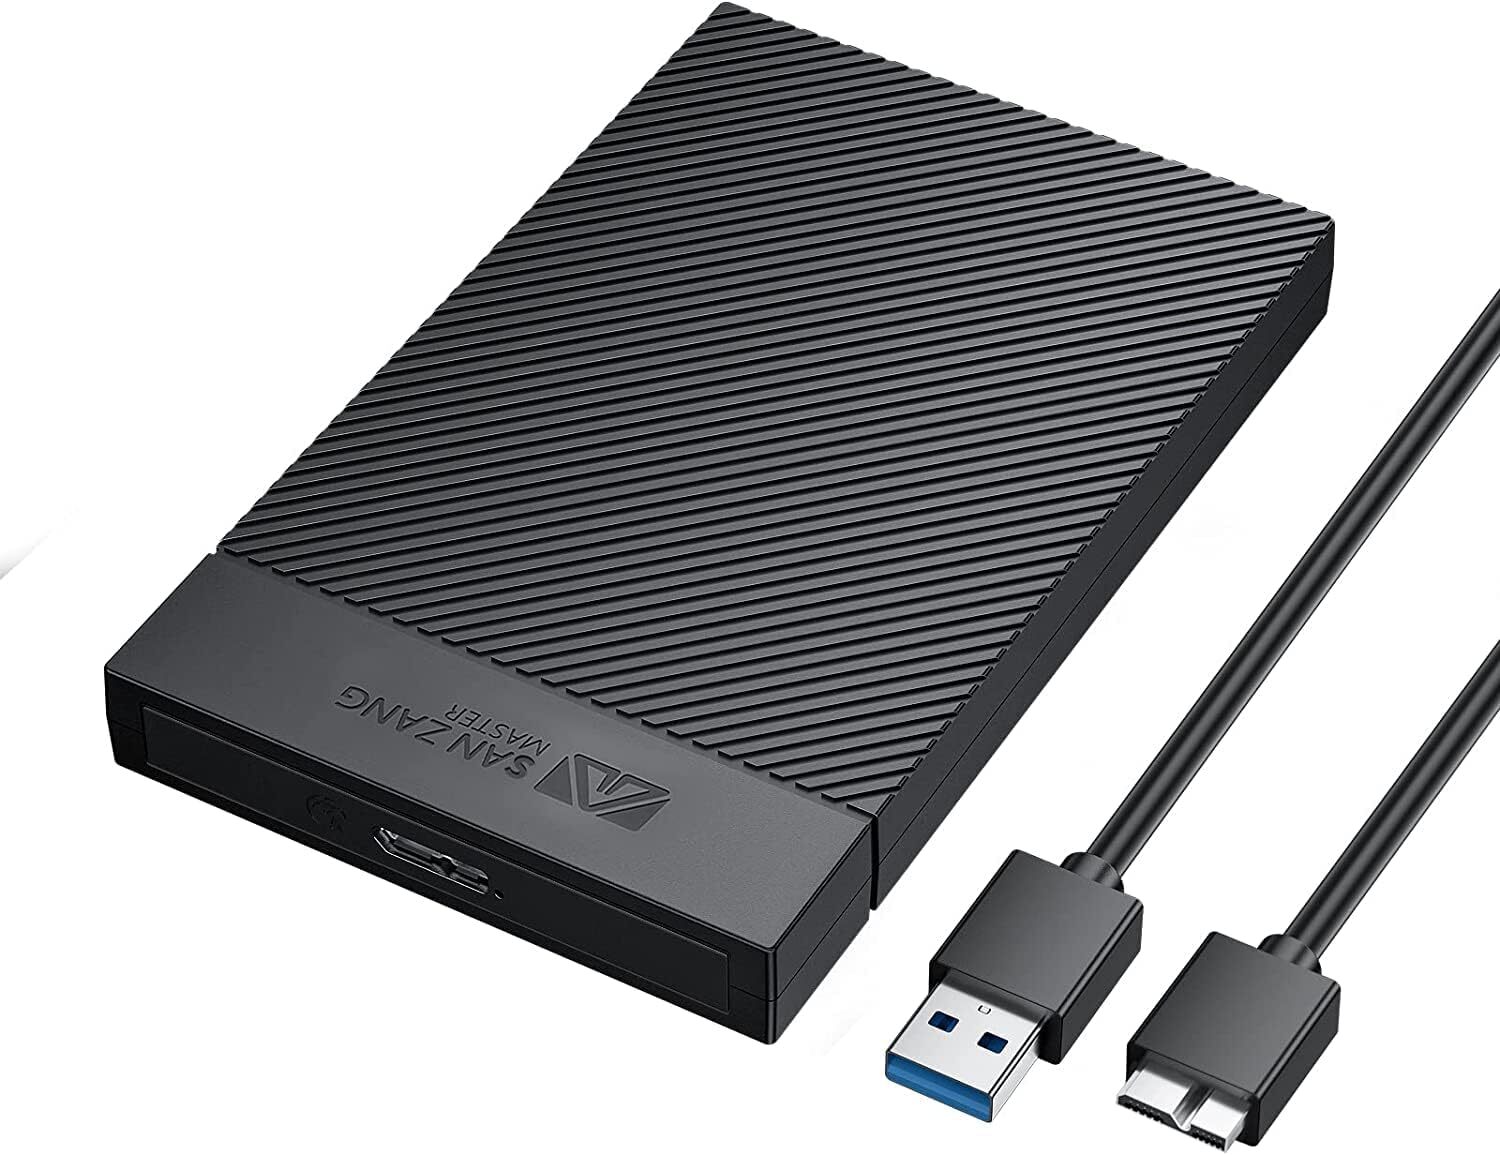 AN ZANG MASTER 2.5インチ HDD ケース USB 3.0接続 SATA UASP対応 rt158